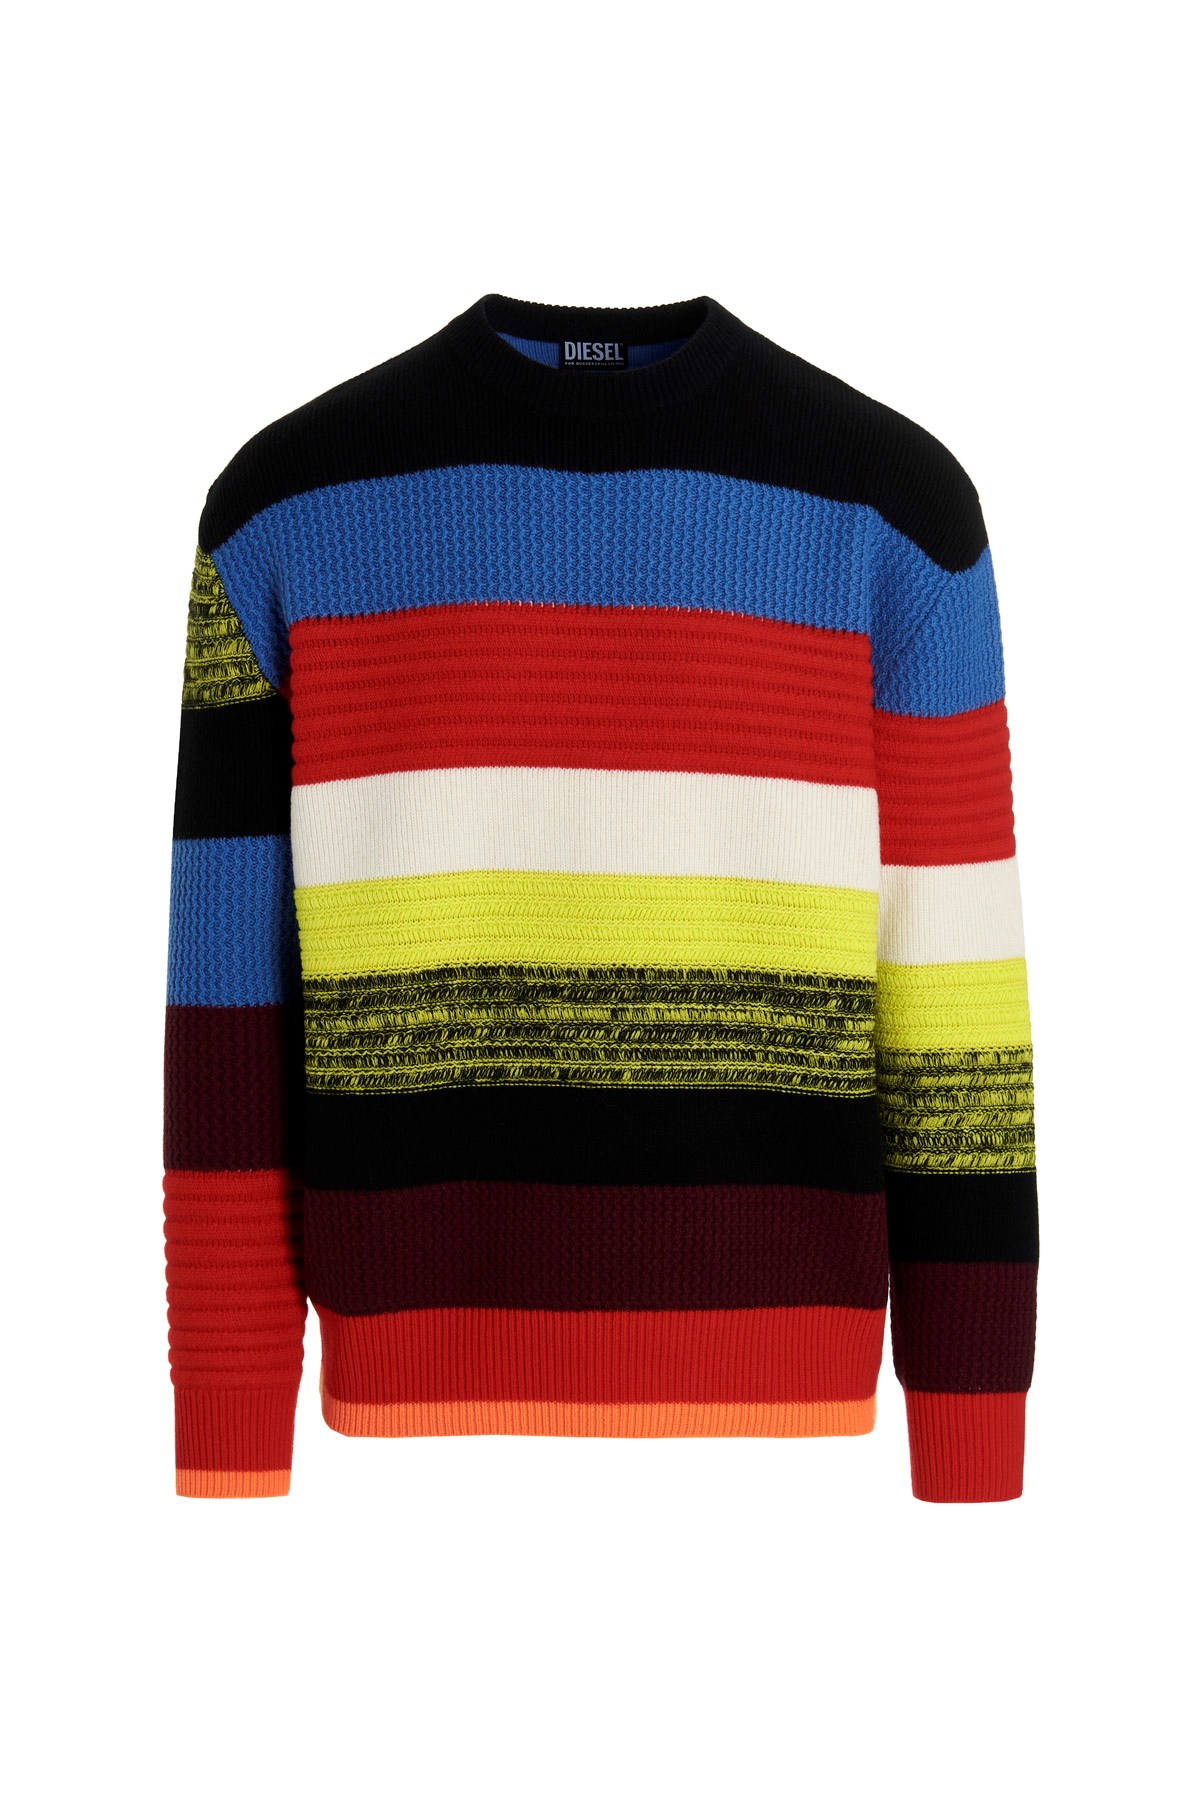 DIESEL 'Gardaland’ Sweater